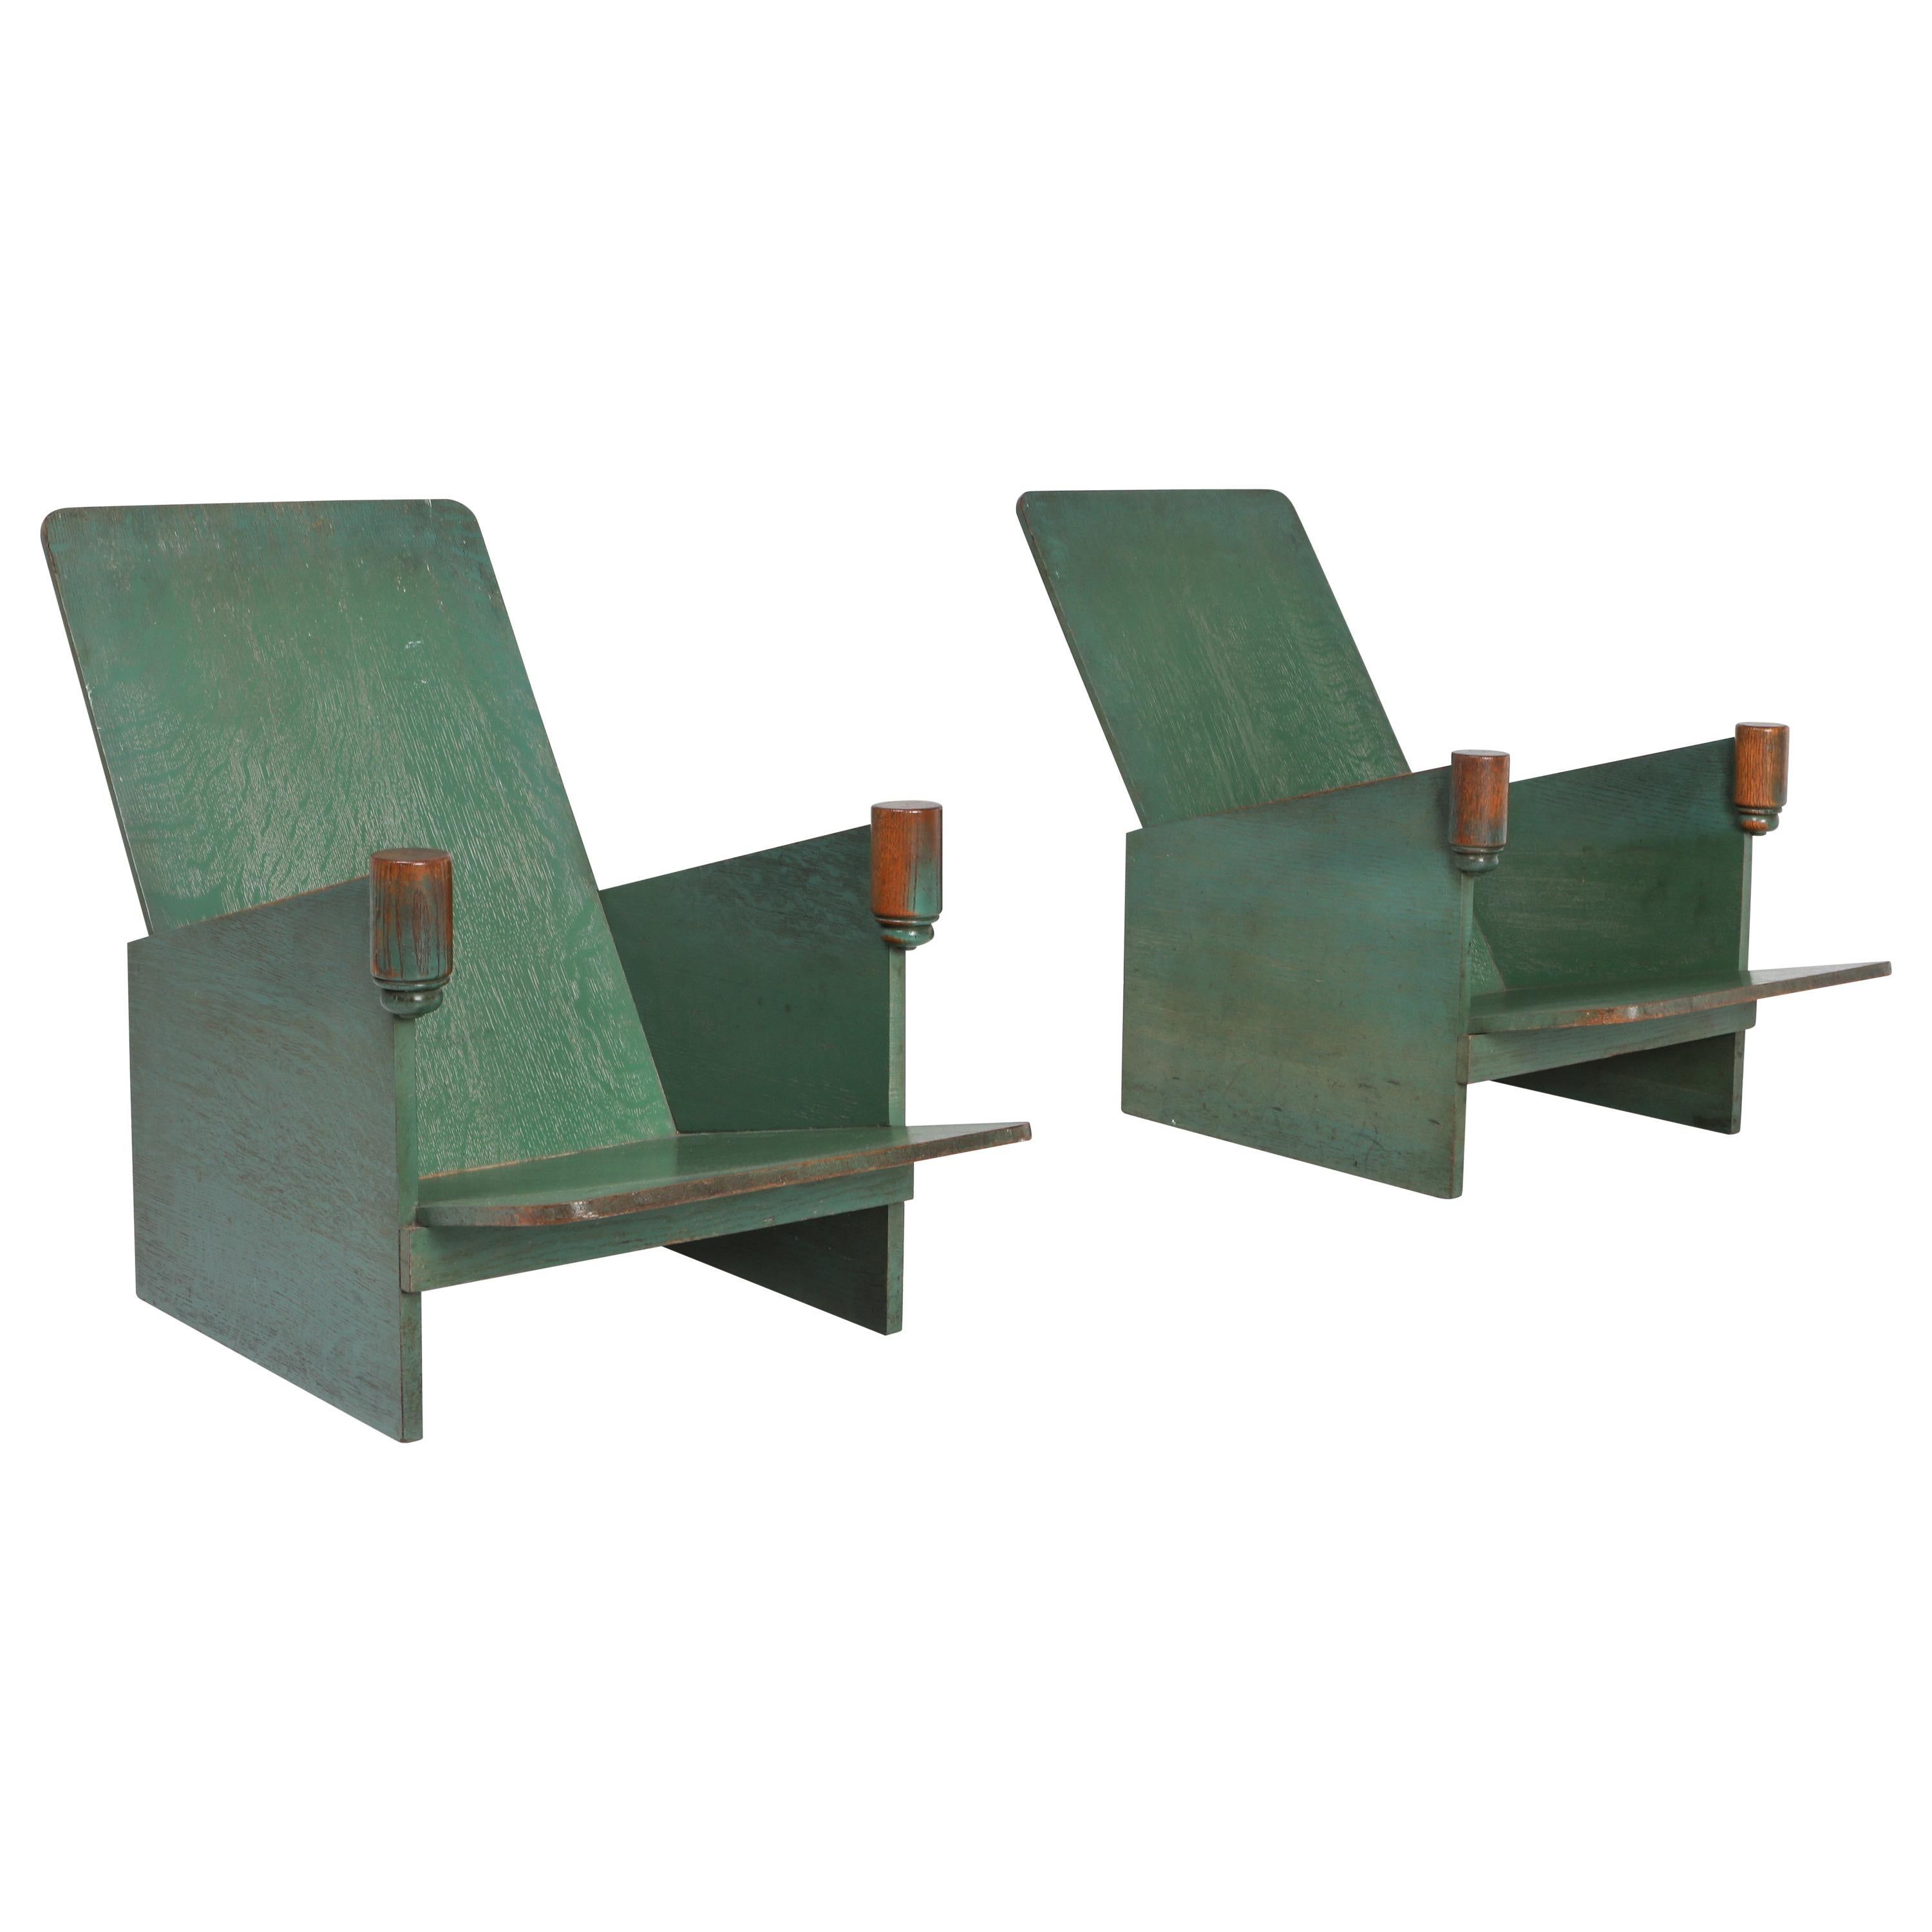 Constructivist Pair of Green Lounge Chairs, Belgium, 1920s